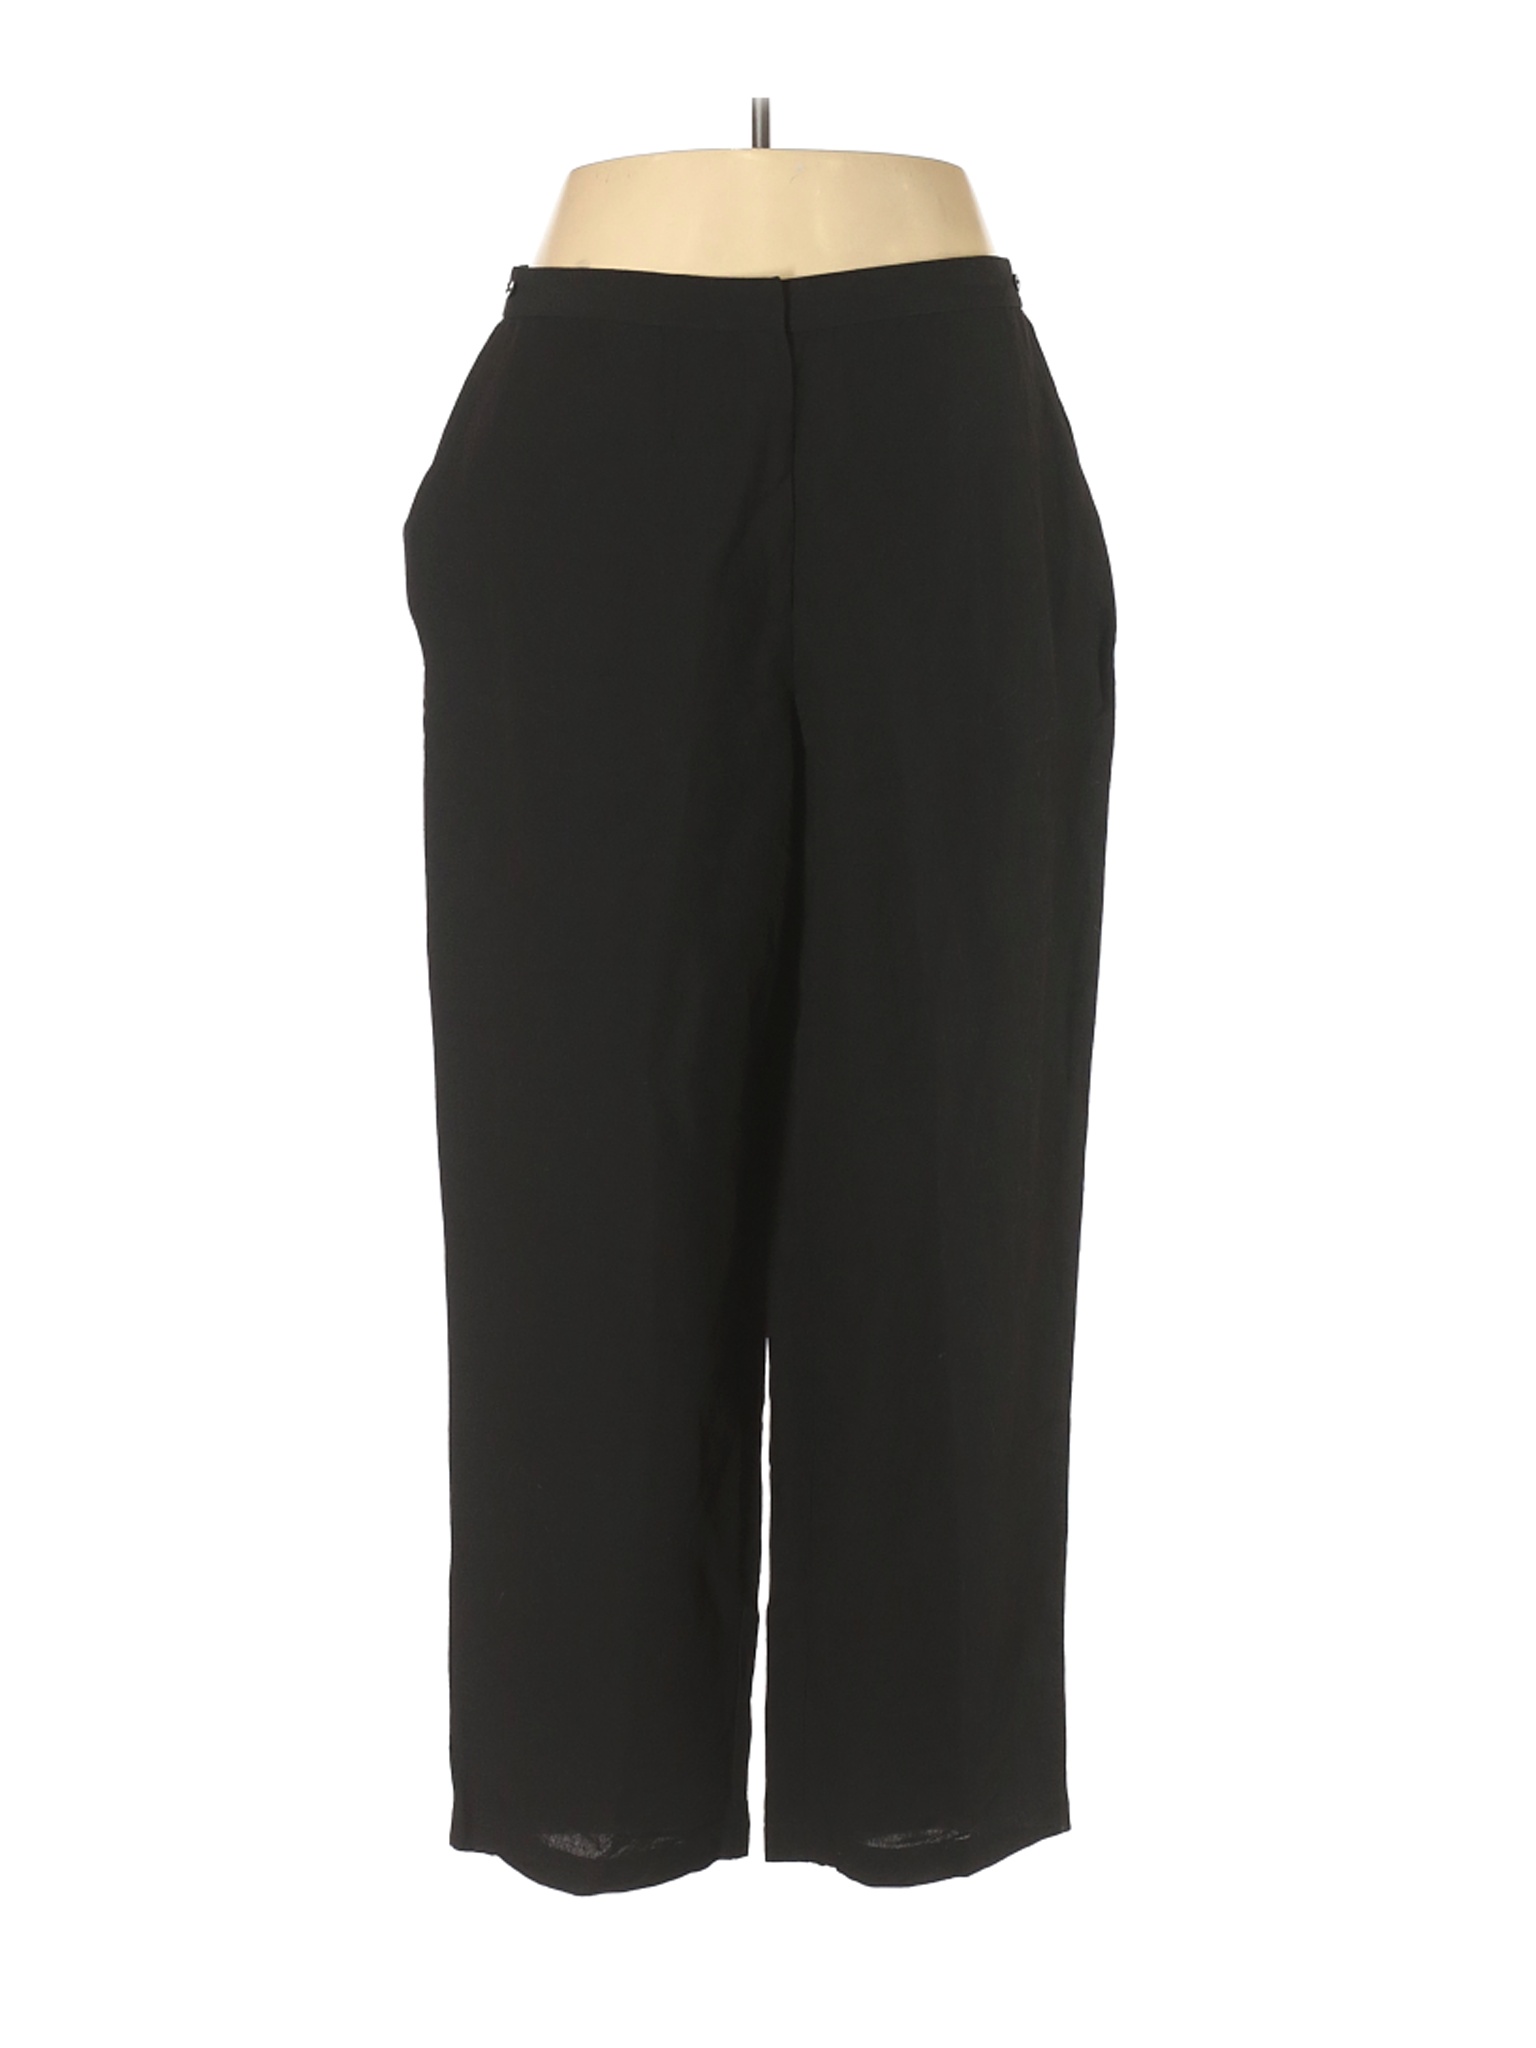 NWT Eileen Fisher Women Black Dress Pants 1X Plus | eBay